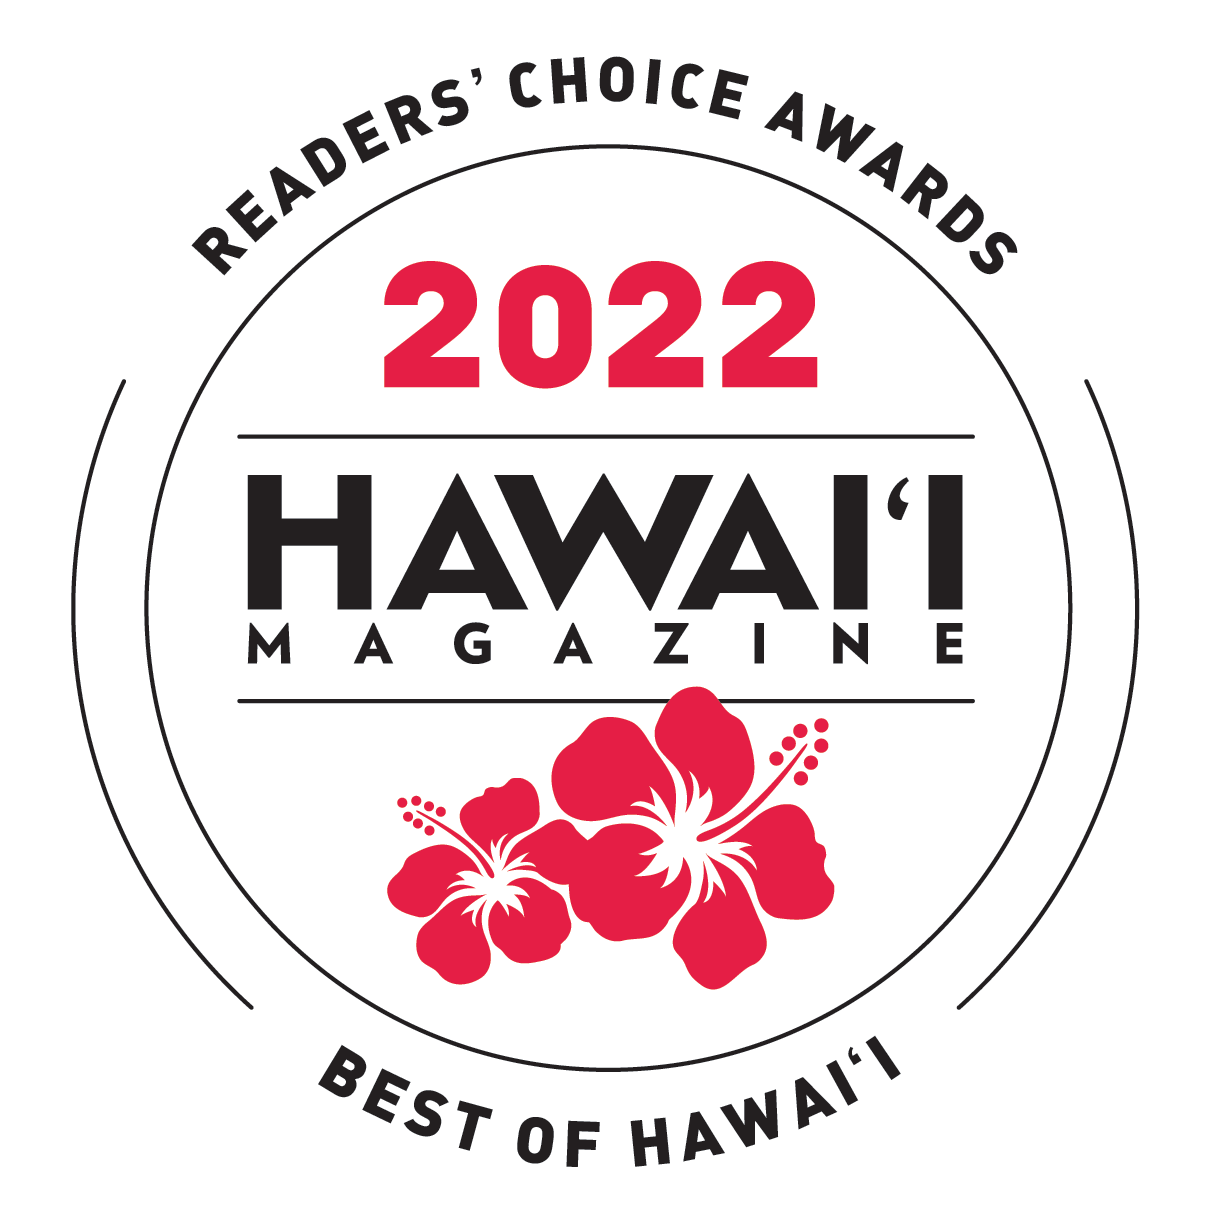 Hawaii Magazine Readers' Choice Awards 2022